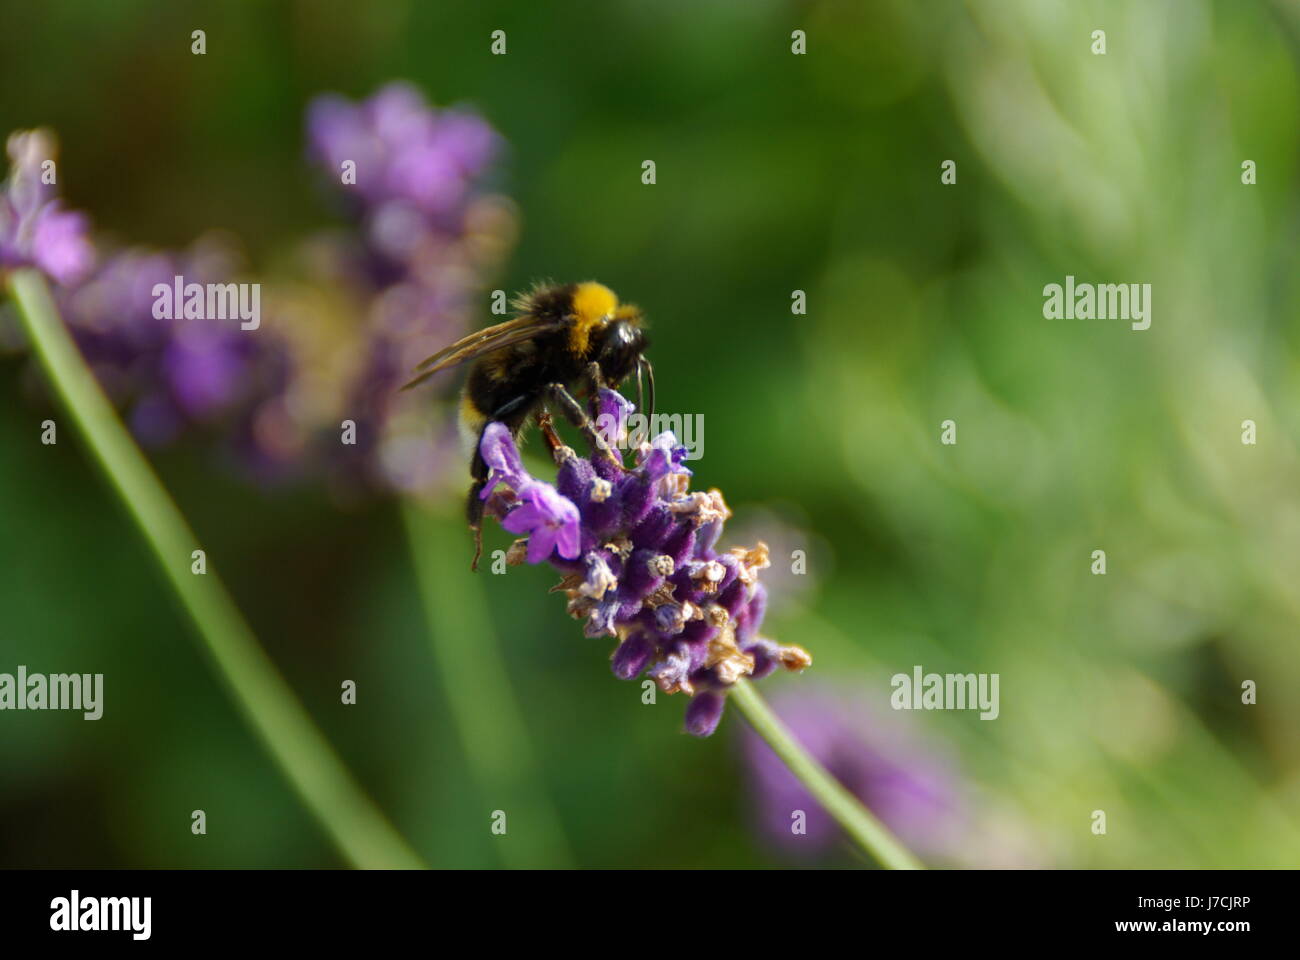 animal insect flower plant bumblebee bloom blossom flourish flourishing Stock Photo